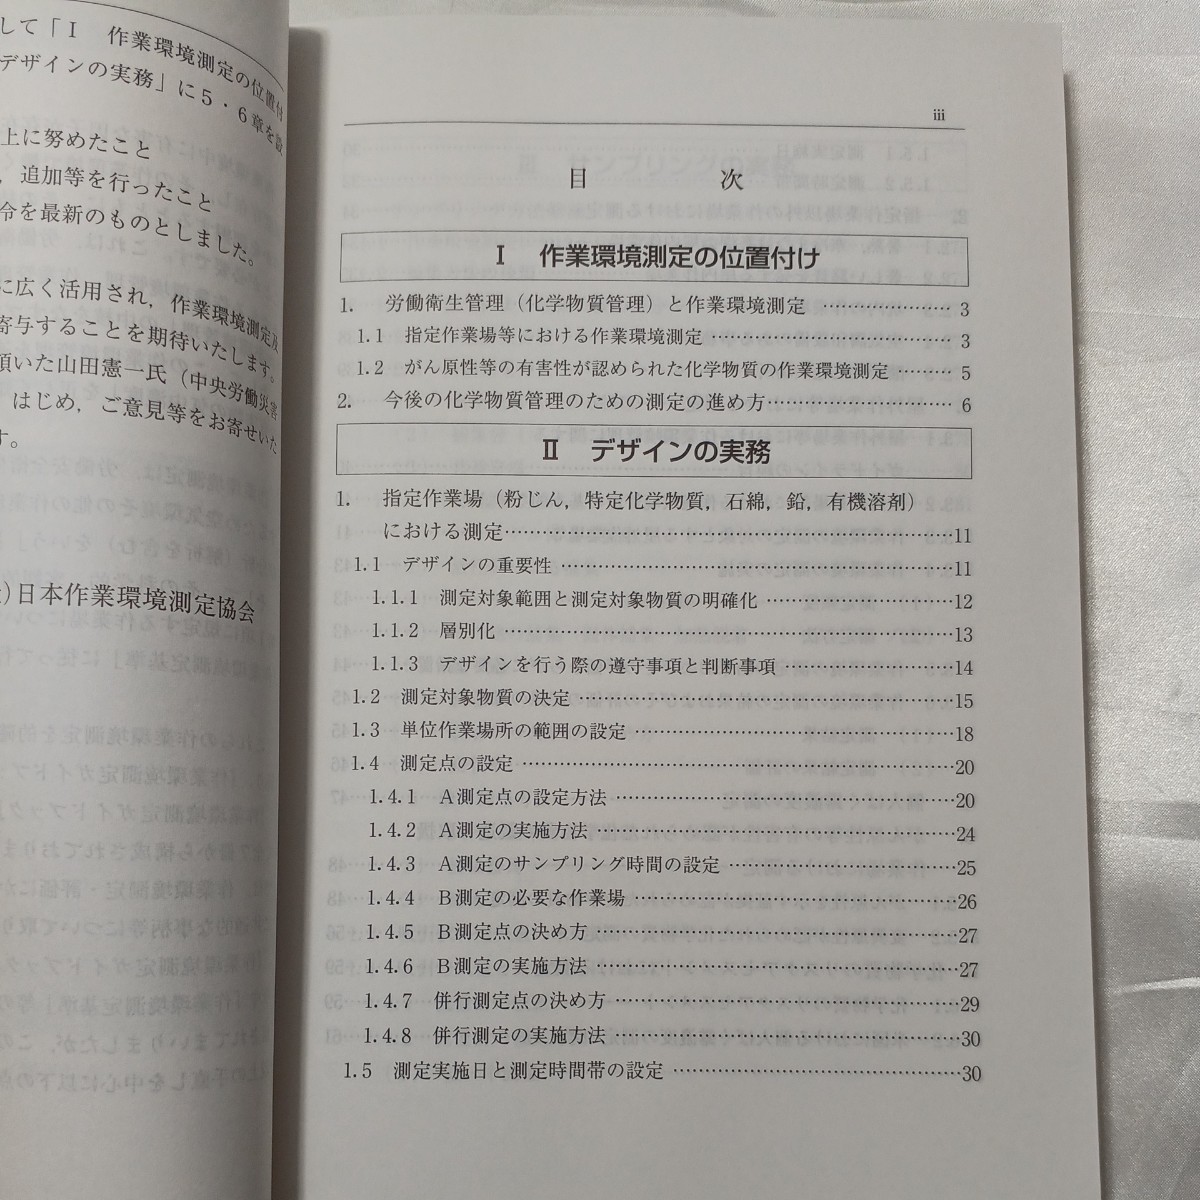 zaa-509♪作業環境測定ガイドブック 0 総論編 日本作業環境測定協会 (著) 日本作業環境測定協会; 改訂第3版（2017年6月30日）の画像2